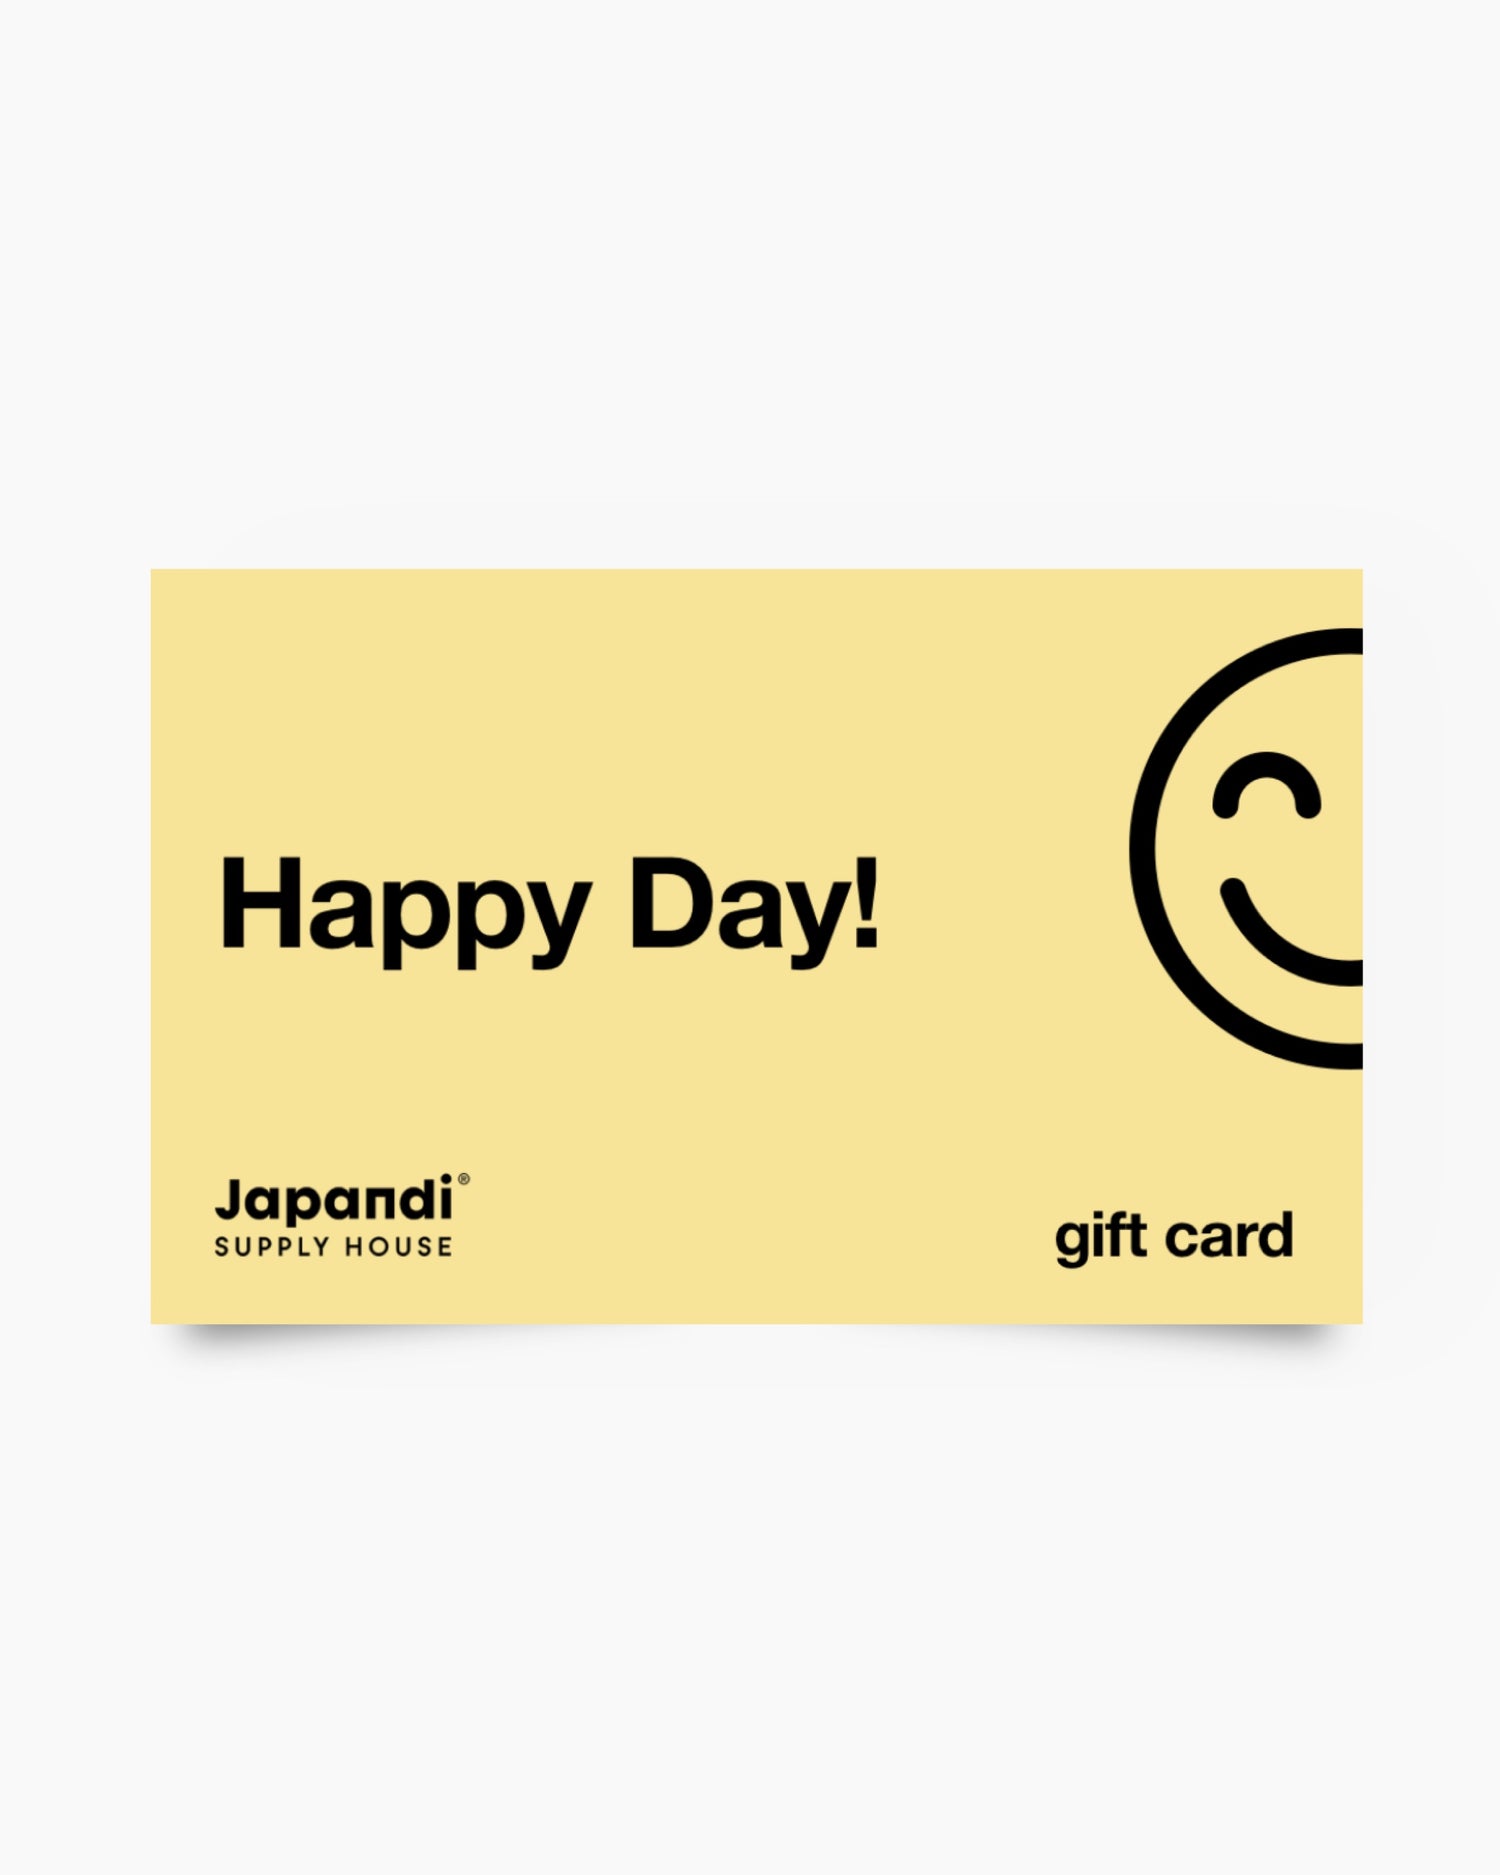 Japandi Supply House gift card